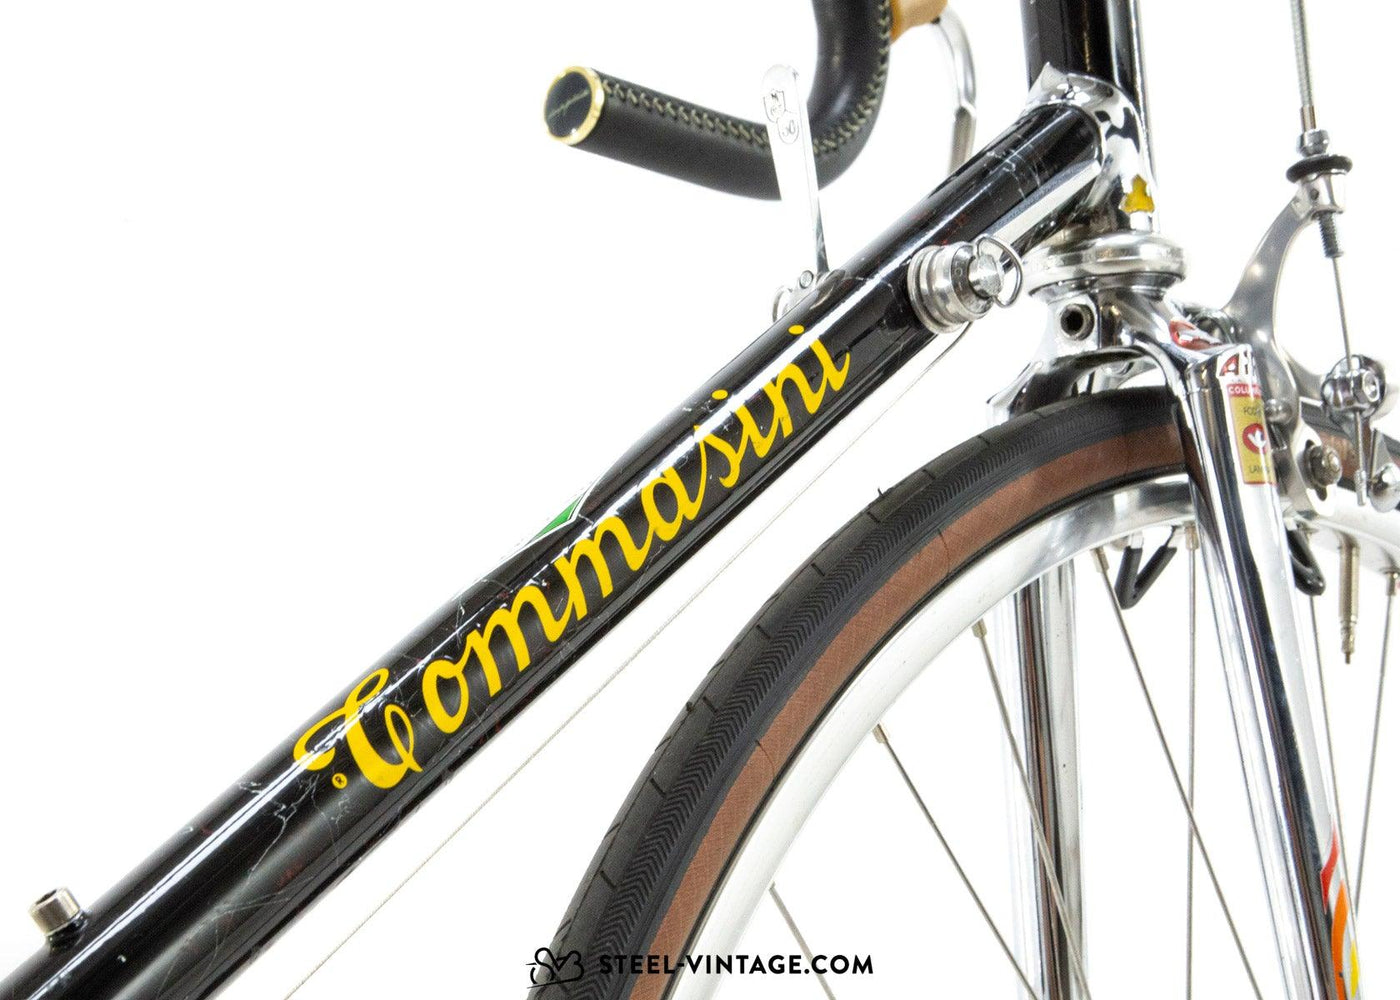 Tommasini Super Prestige Campagnolo 50th Anniversary Road Bike 1980s - Steel Vintage Bikes